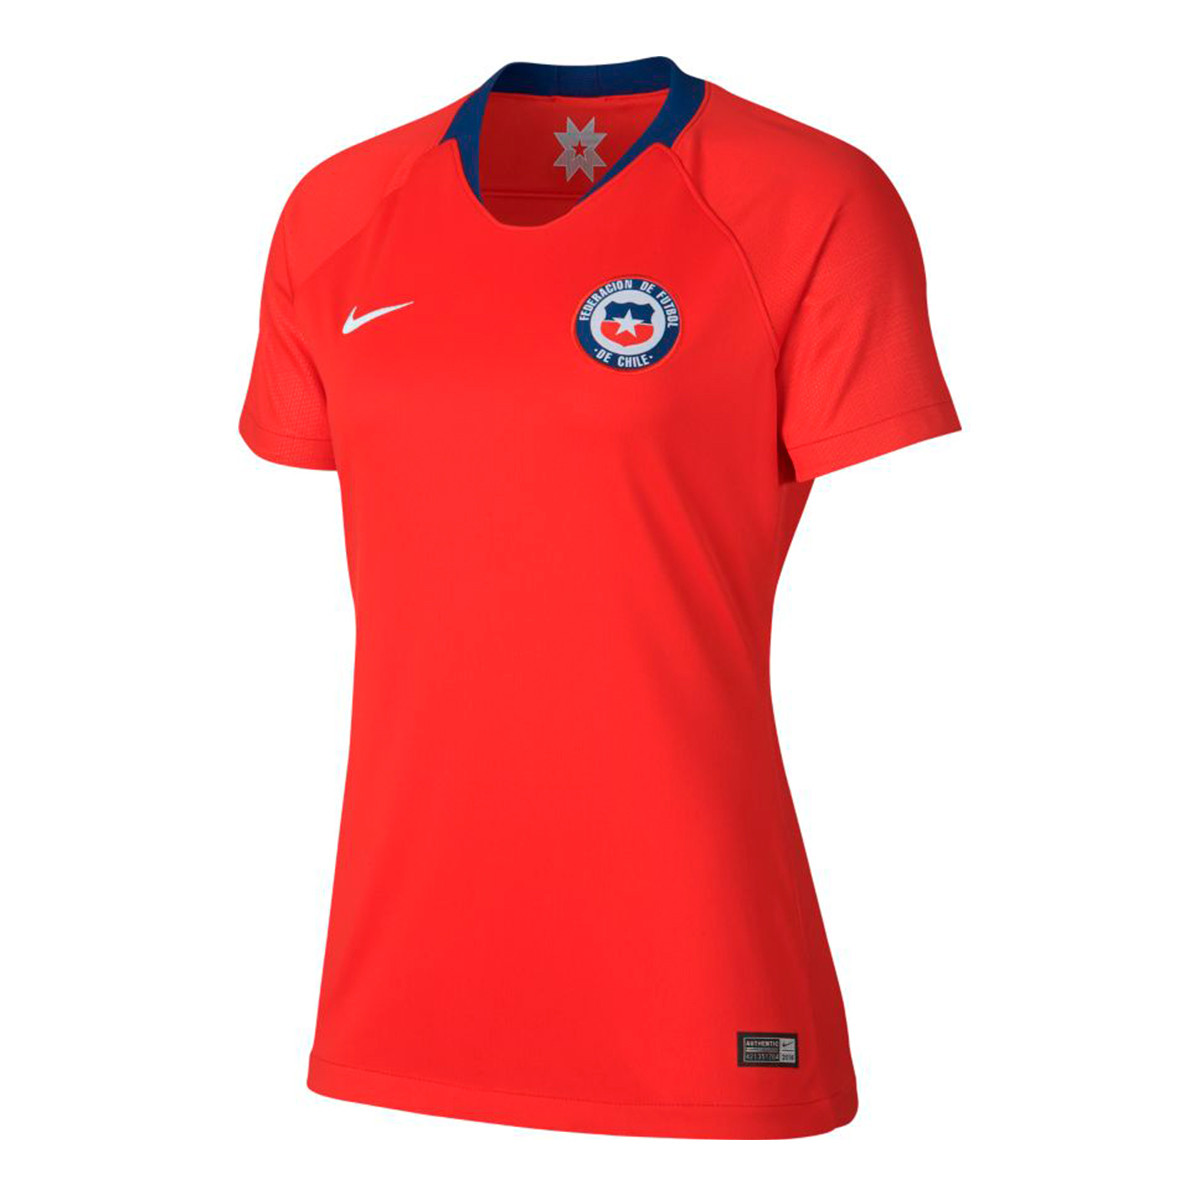 Ø¹Ø§Ù„Ù… Ù…ØªØ²Ø§Ù…Ù†Ø© Ø¨Ø´ÙƒÙ„ Ø³ÙŠØ¦ Camiseta Seleccion Chilena 2019 Nike Pleasantgroveumc Net